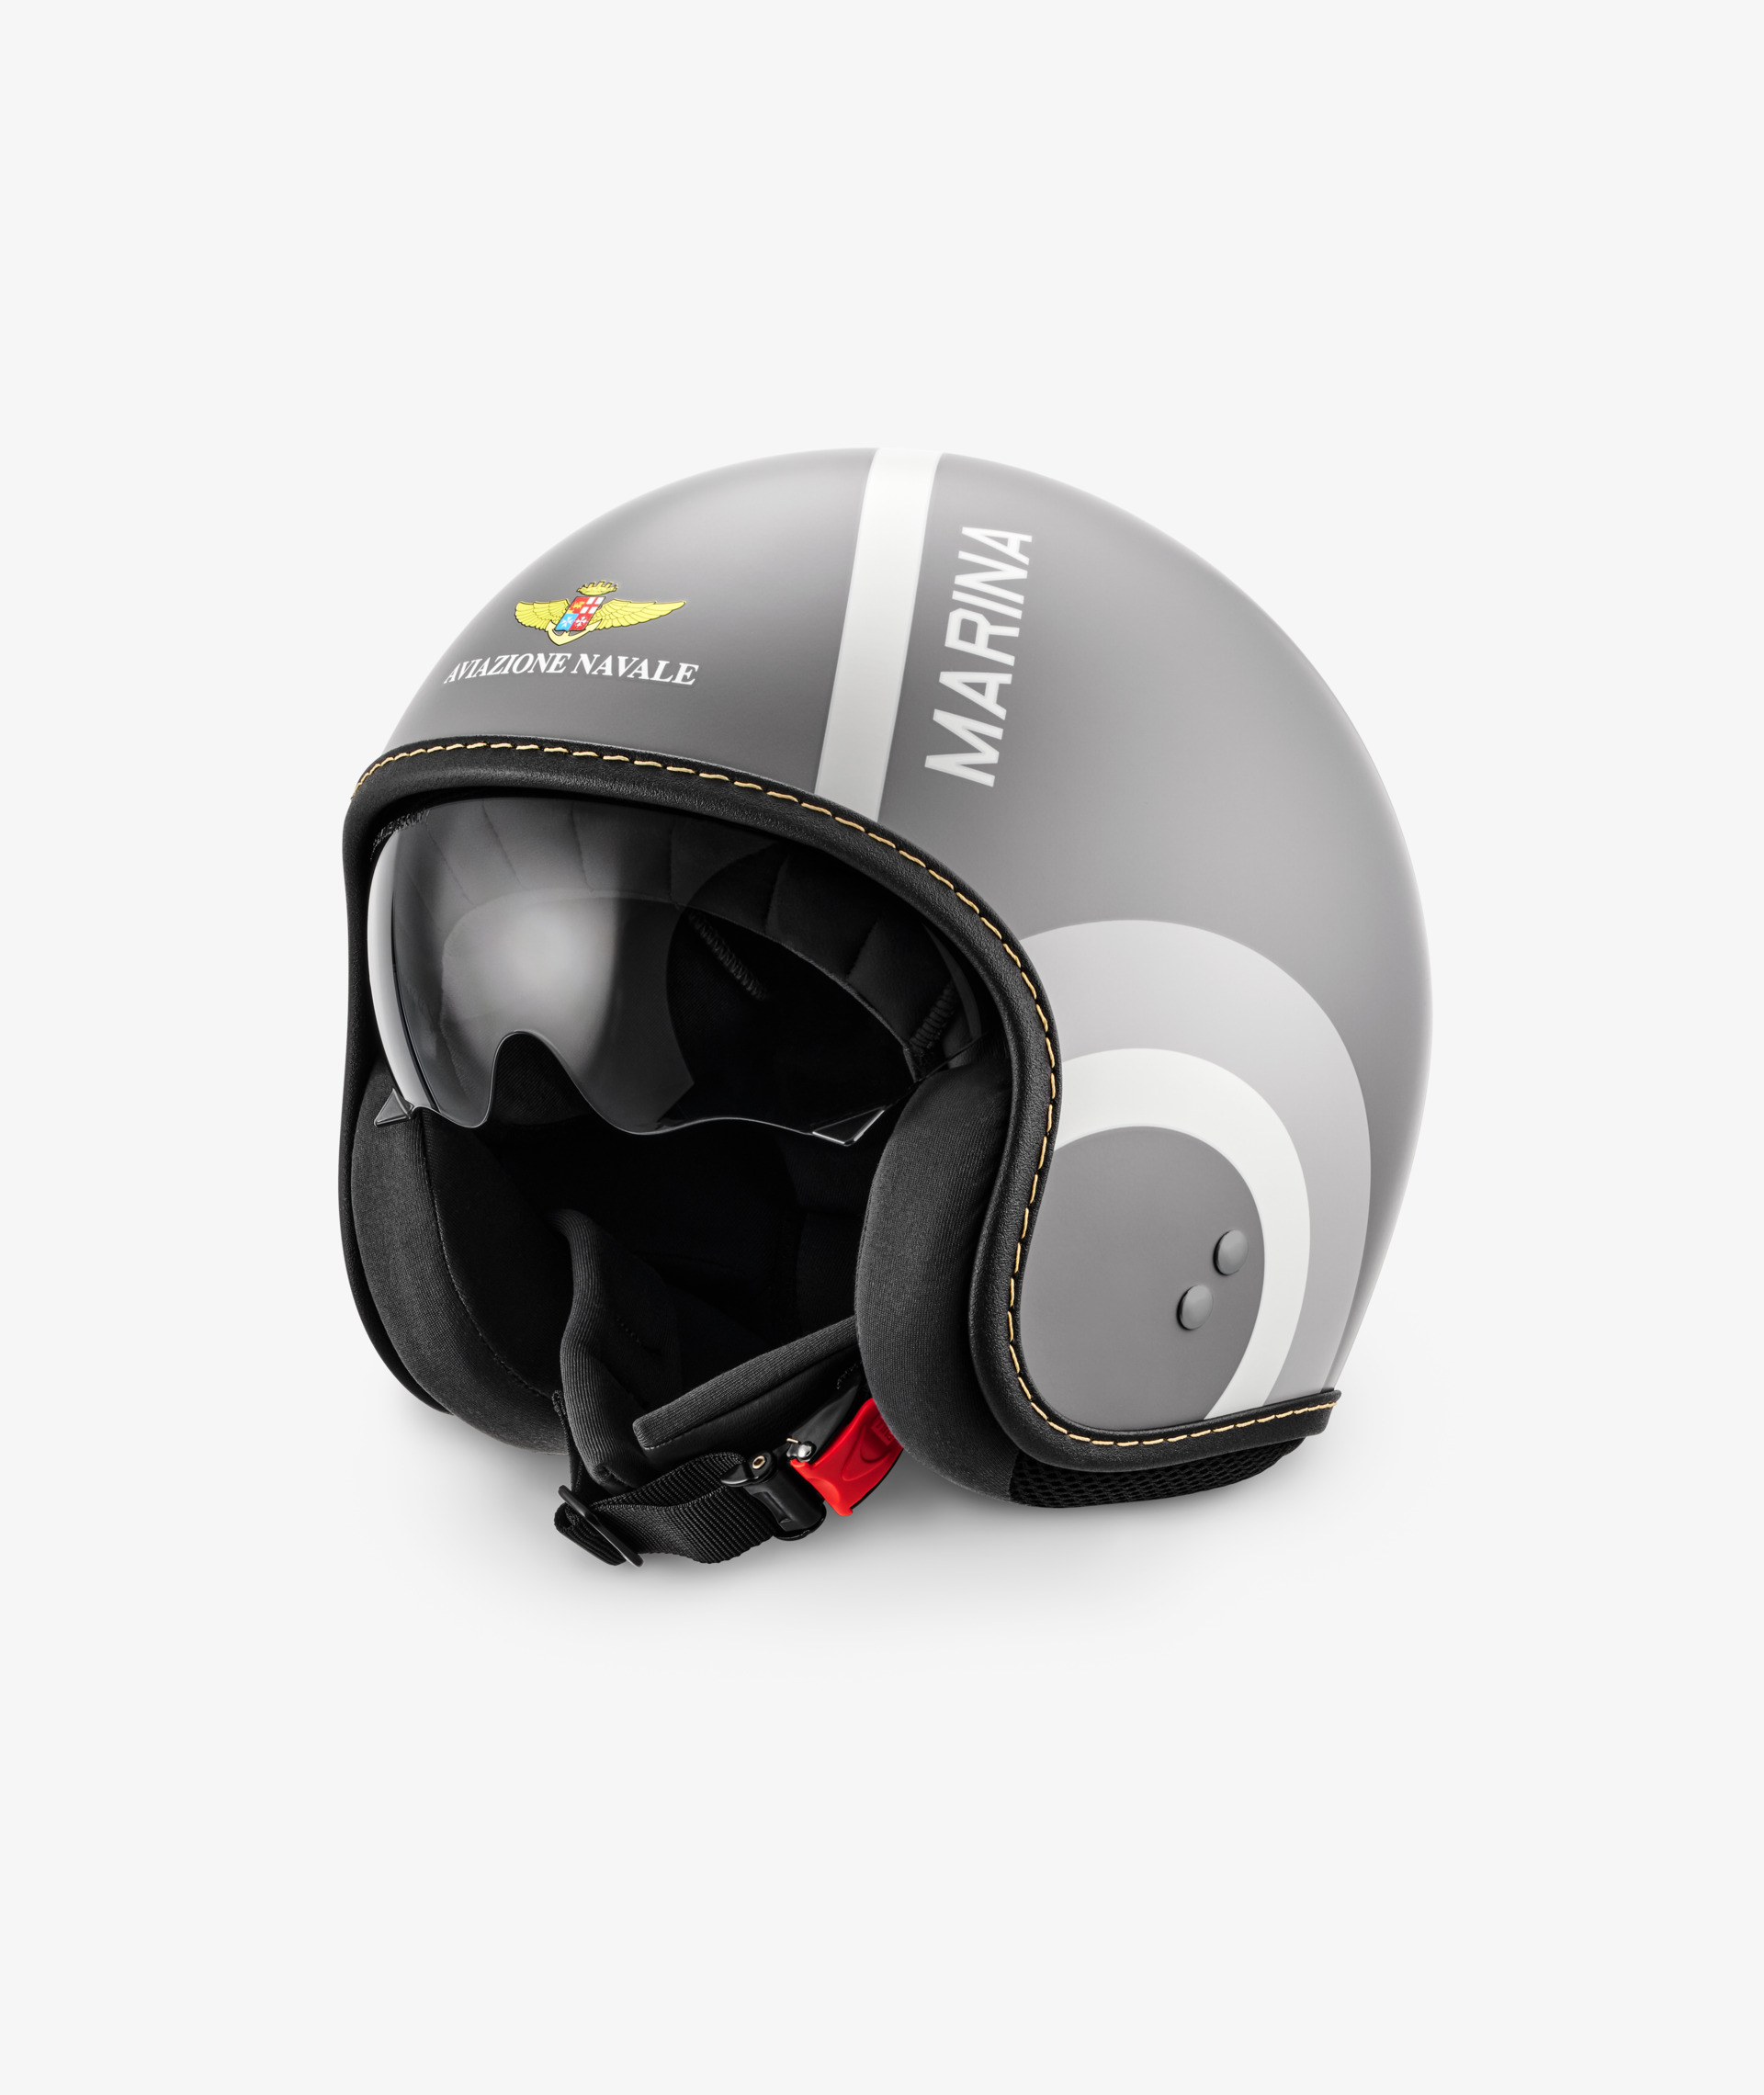 Moto Guzzi Aviazione Navale Jet Helmet, Jet Helmets, Helmets, Full  Catalogue